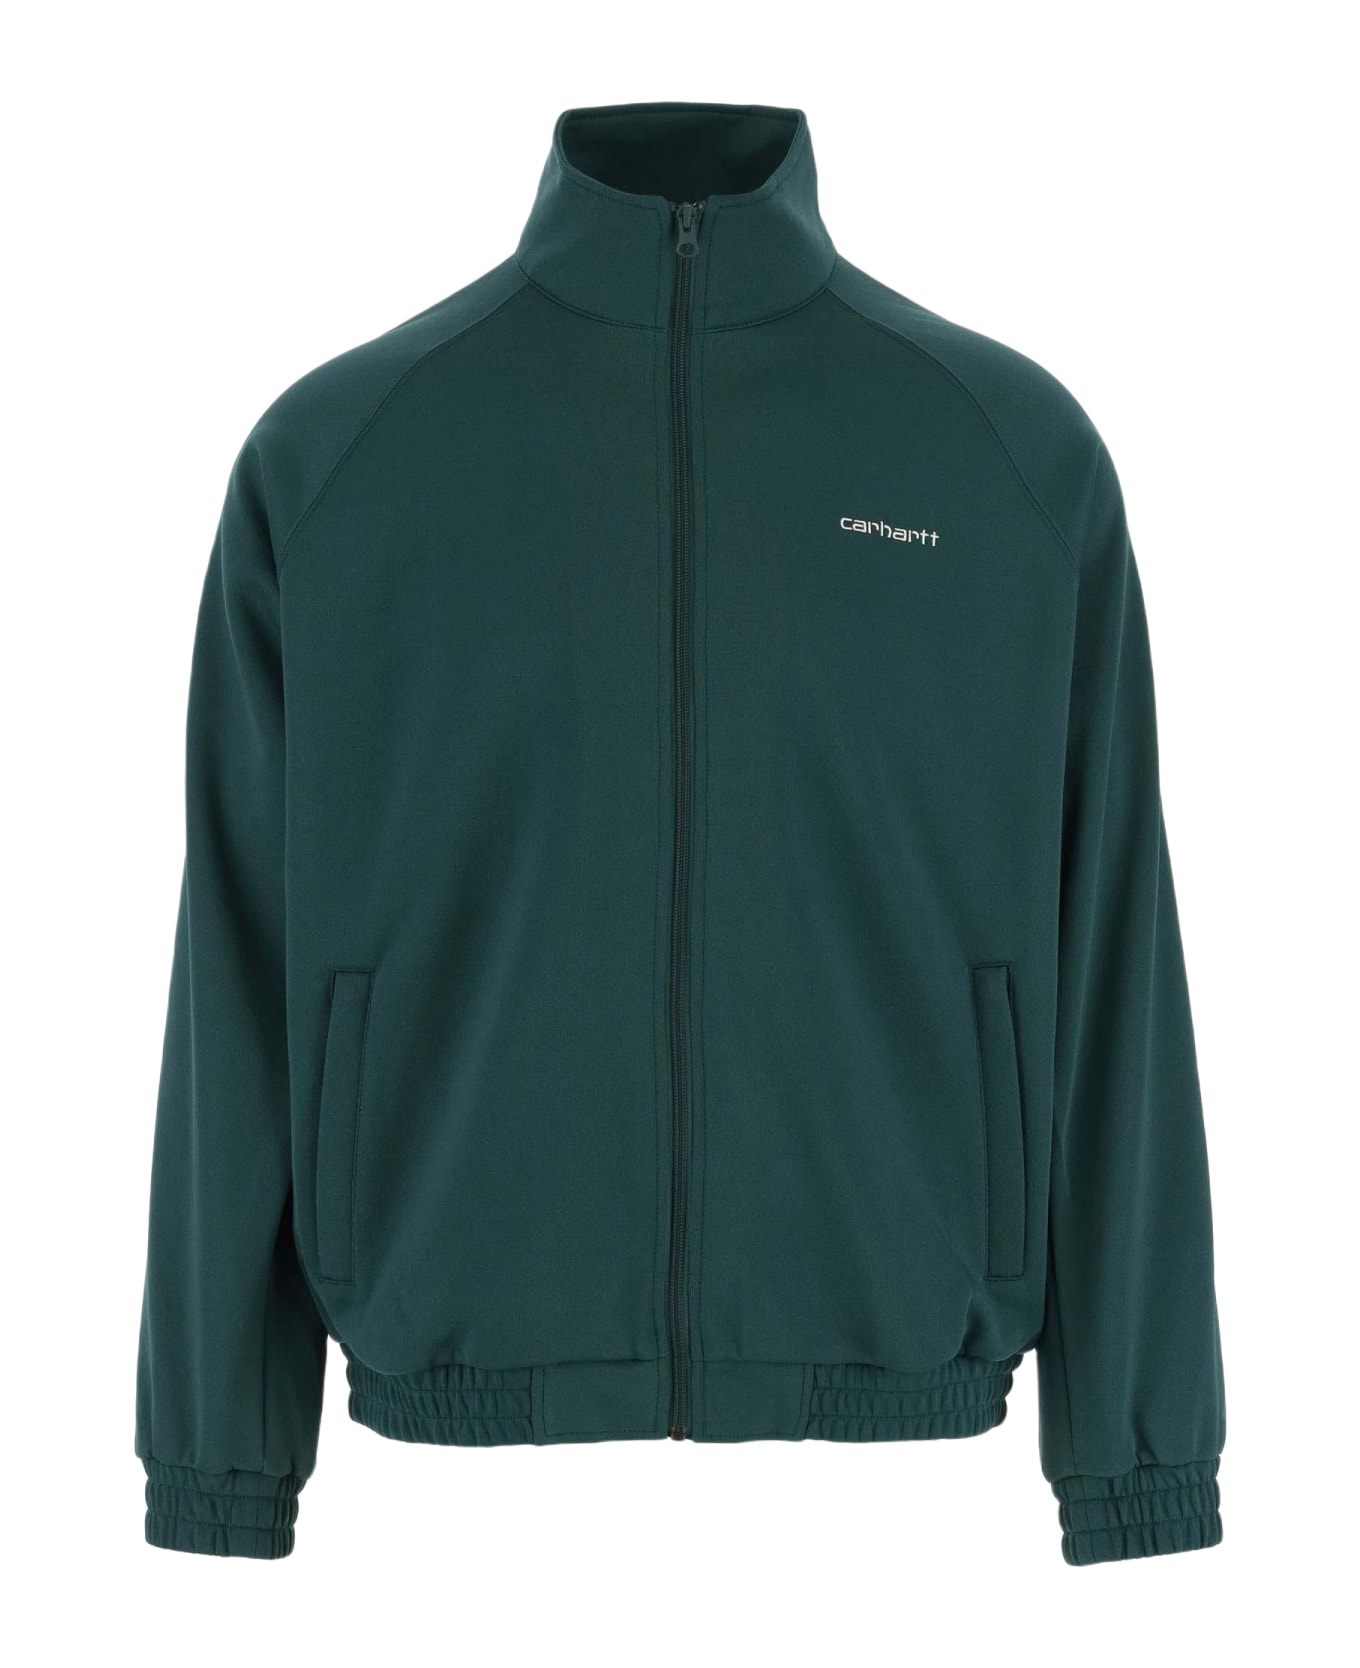 Carhartt Technical Fabric Sports Jacket - Green